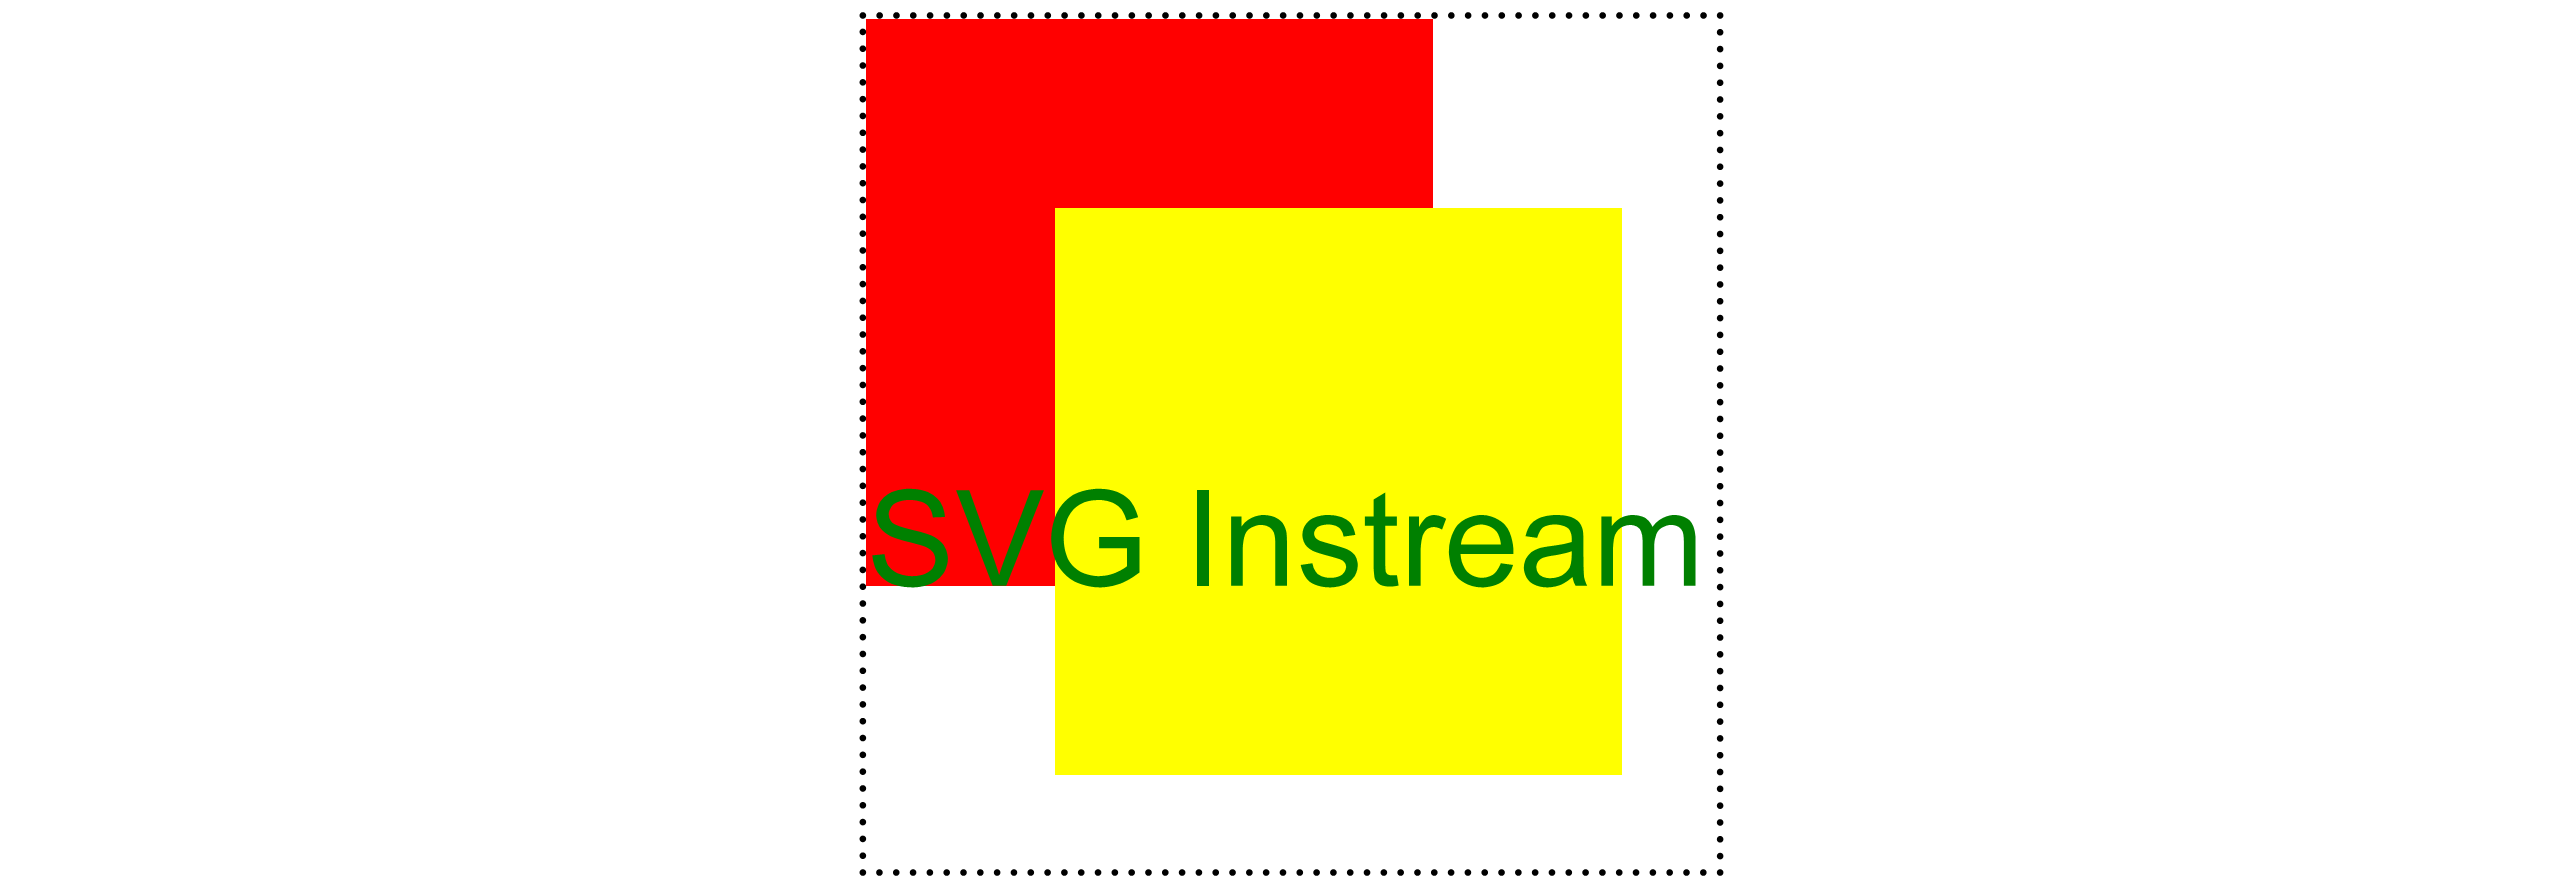 SVG画像